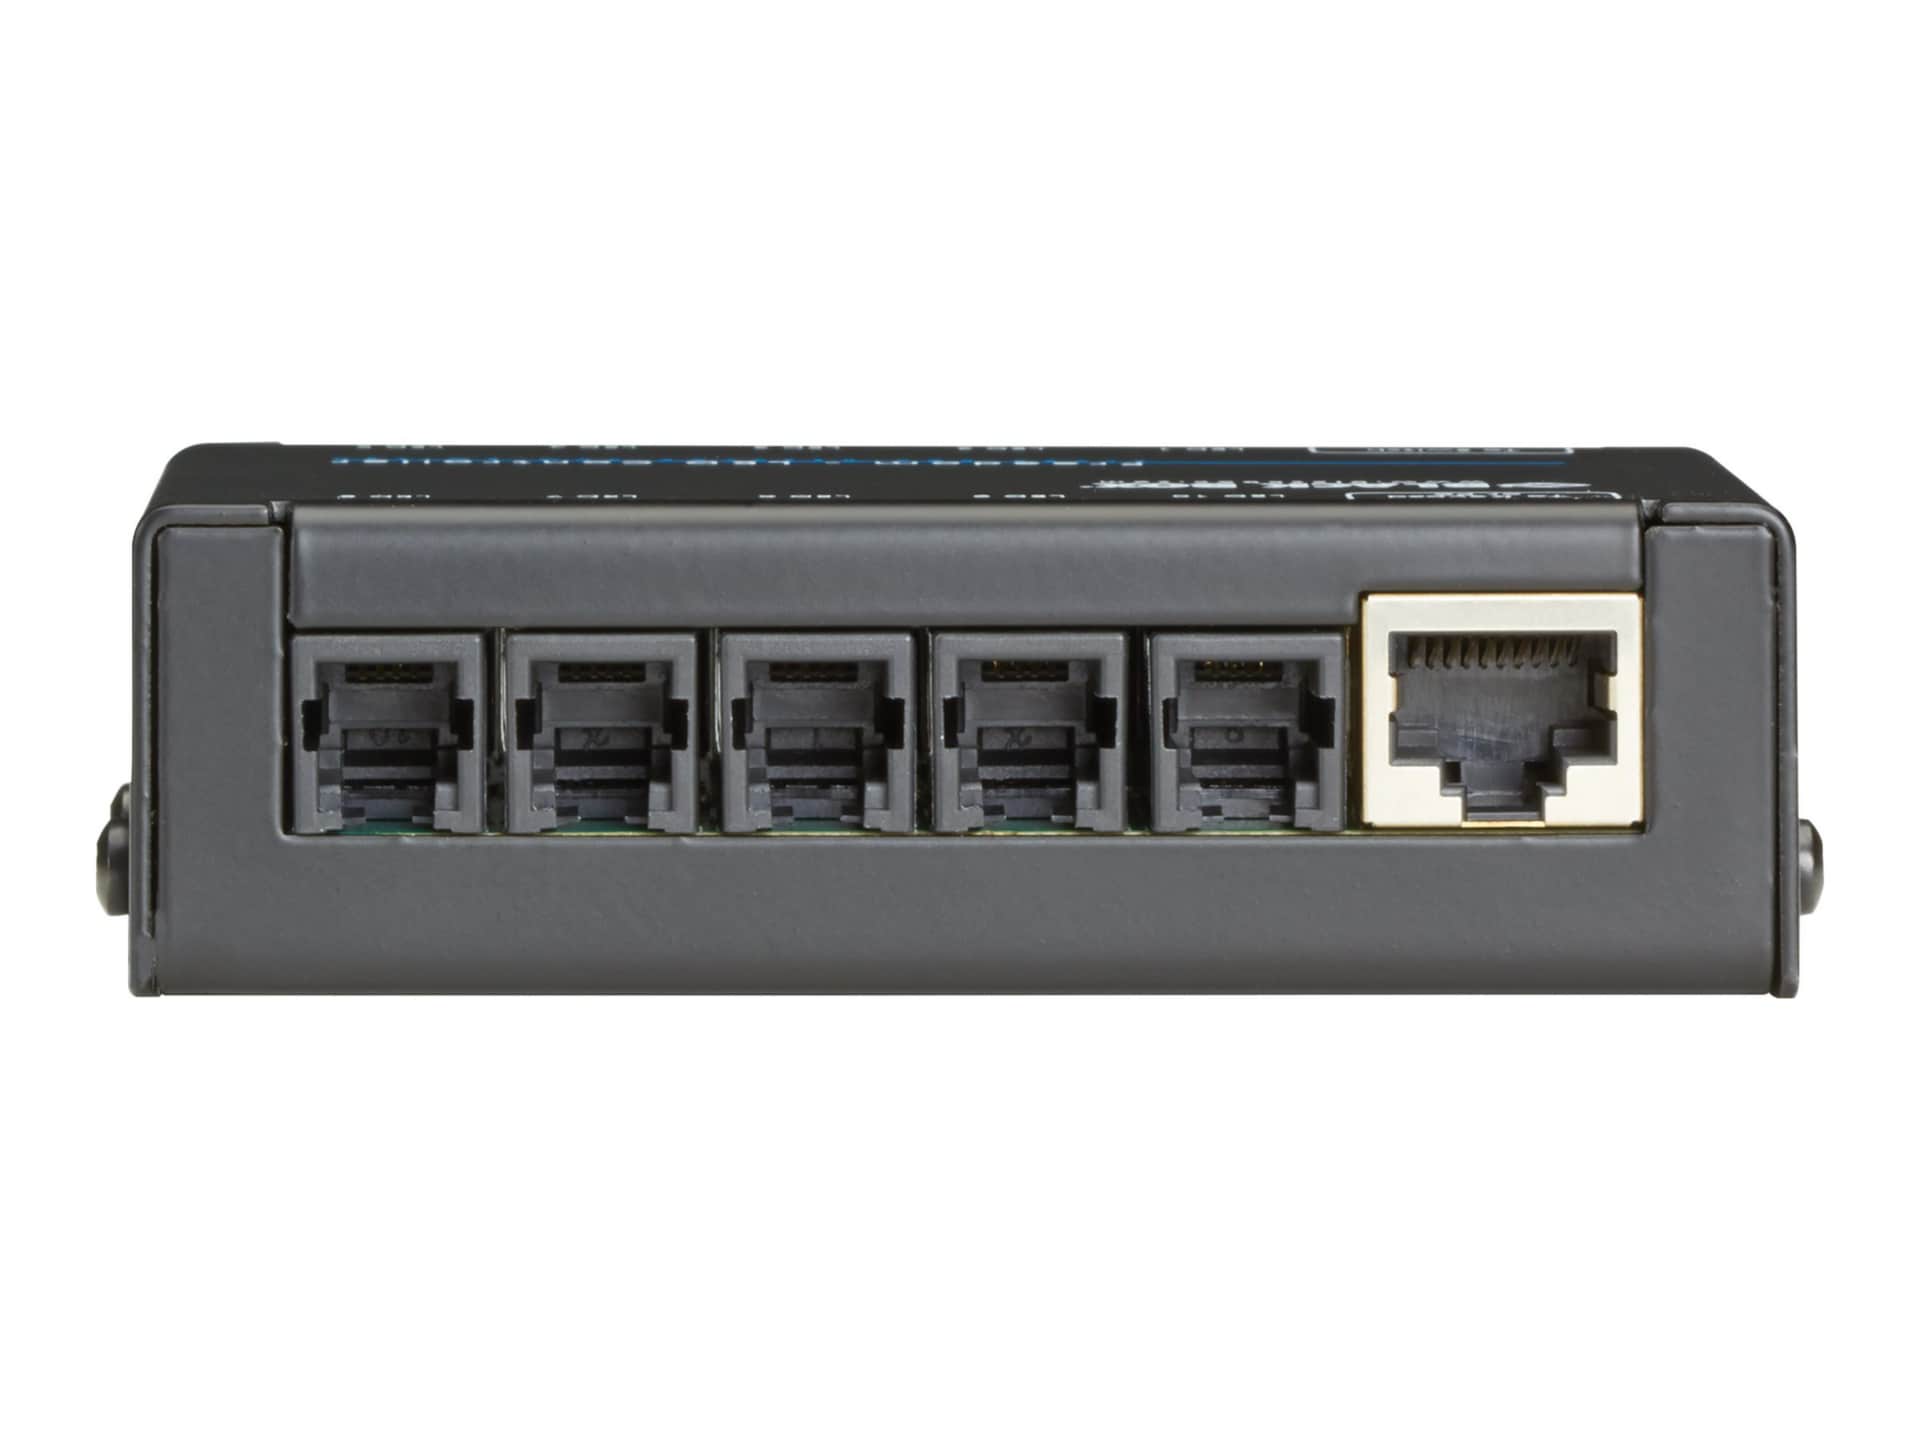 Black Box LED Monitor Identification Kit for Freedom KVM Switch